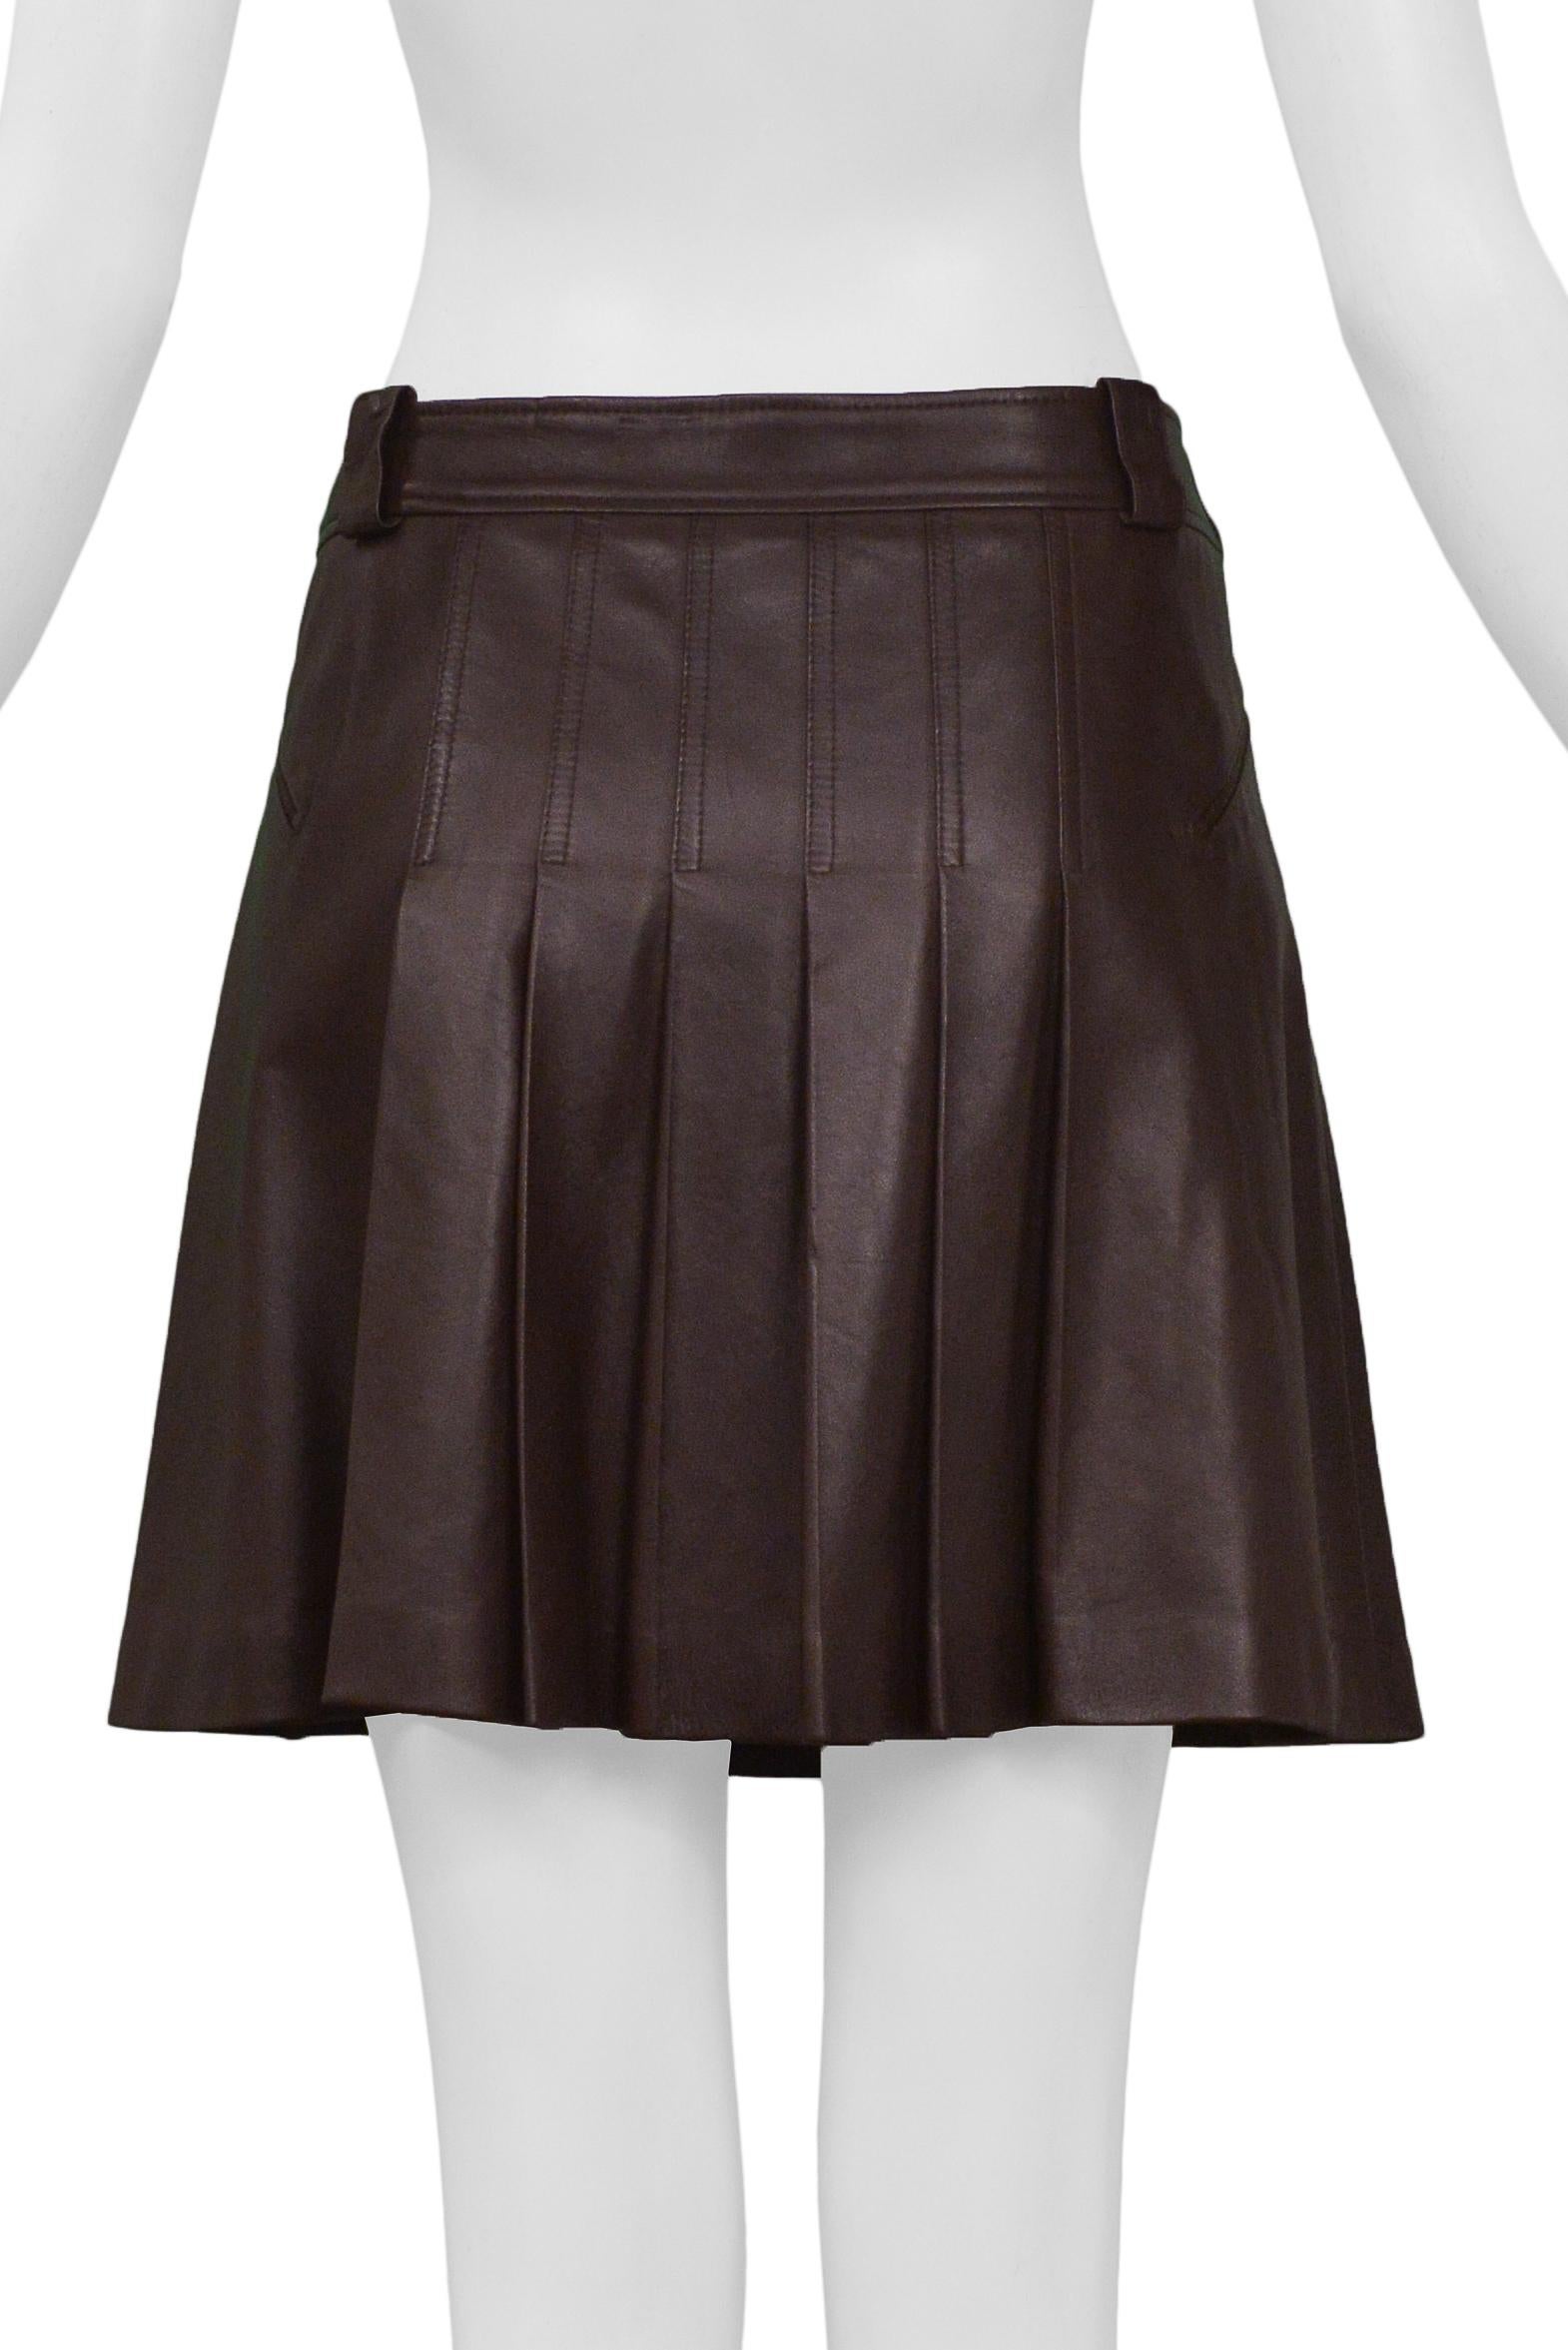 dior skirt brown